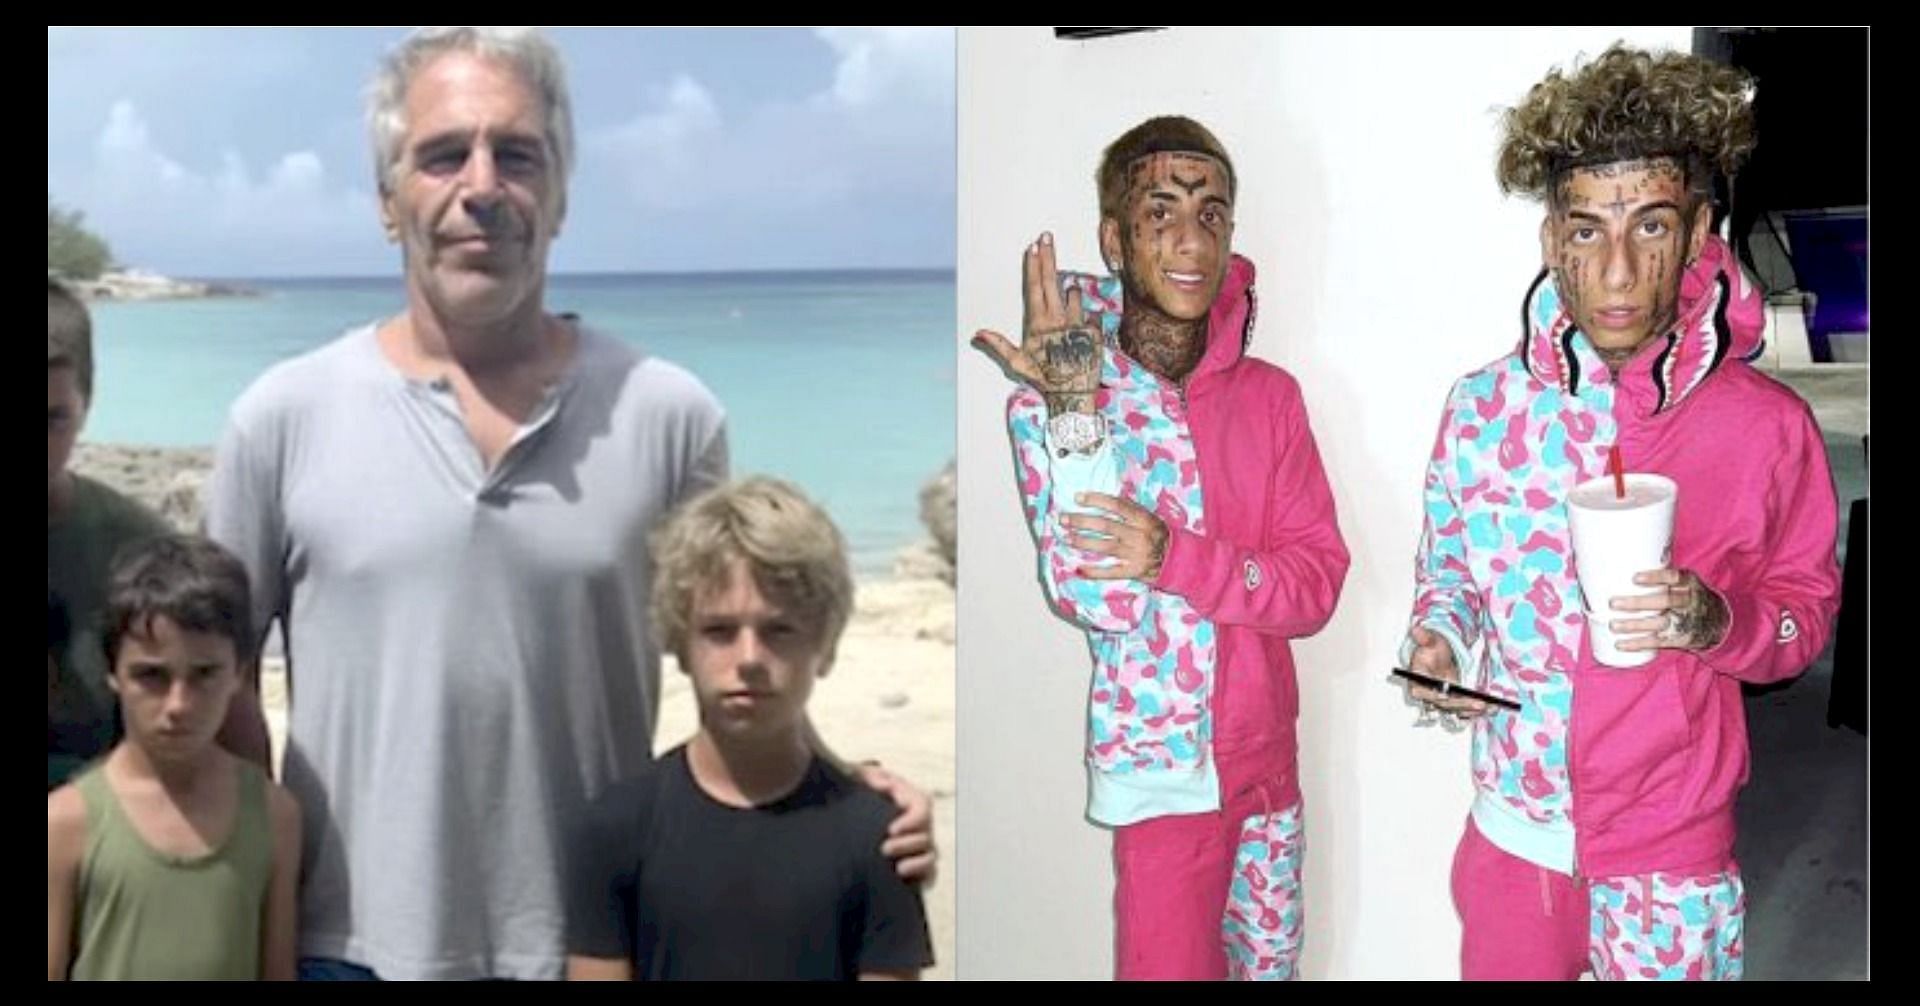 Were the Island Boys on Epstein